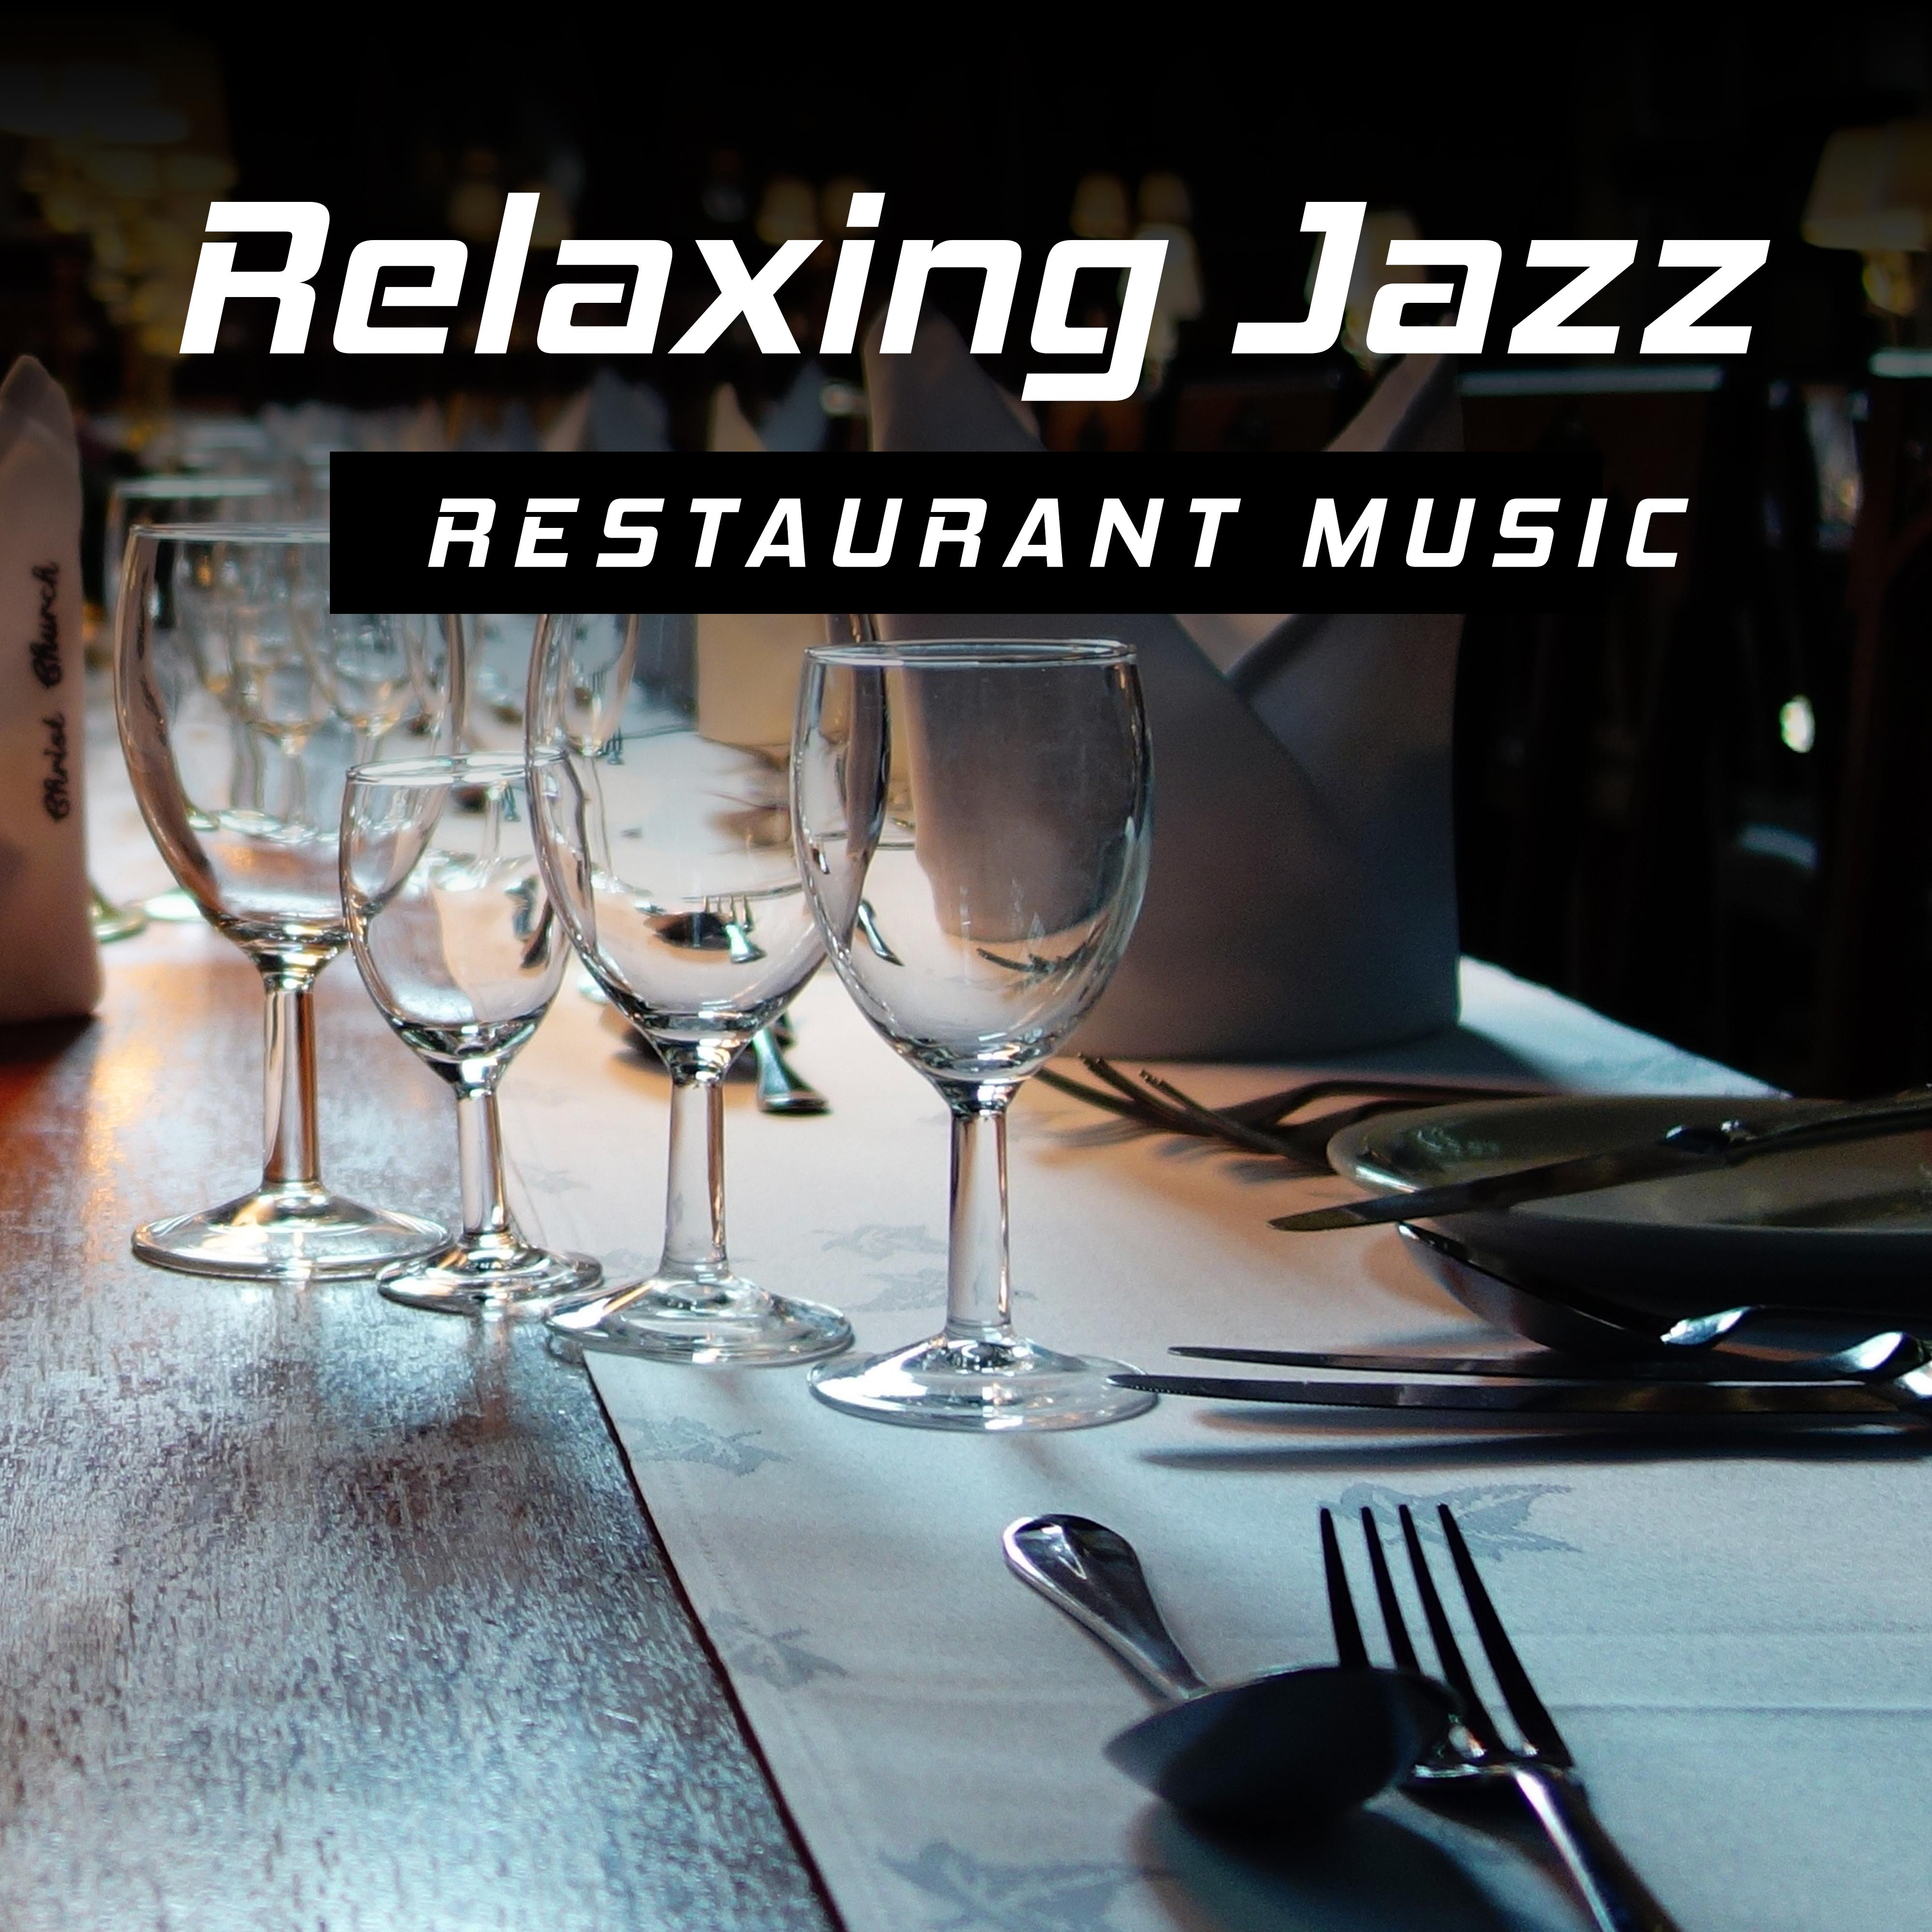 Relaxing Jazz Restaurant Music  Calming Piano Bar, Restaurant Jazz Sounds, Gentle Note, Music for Dinner